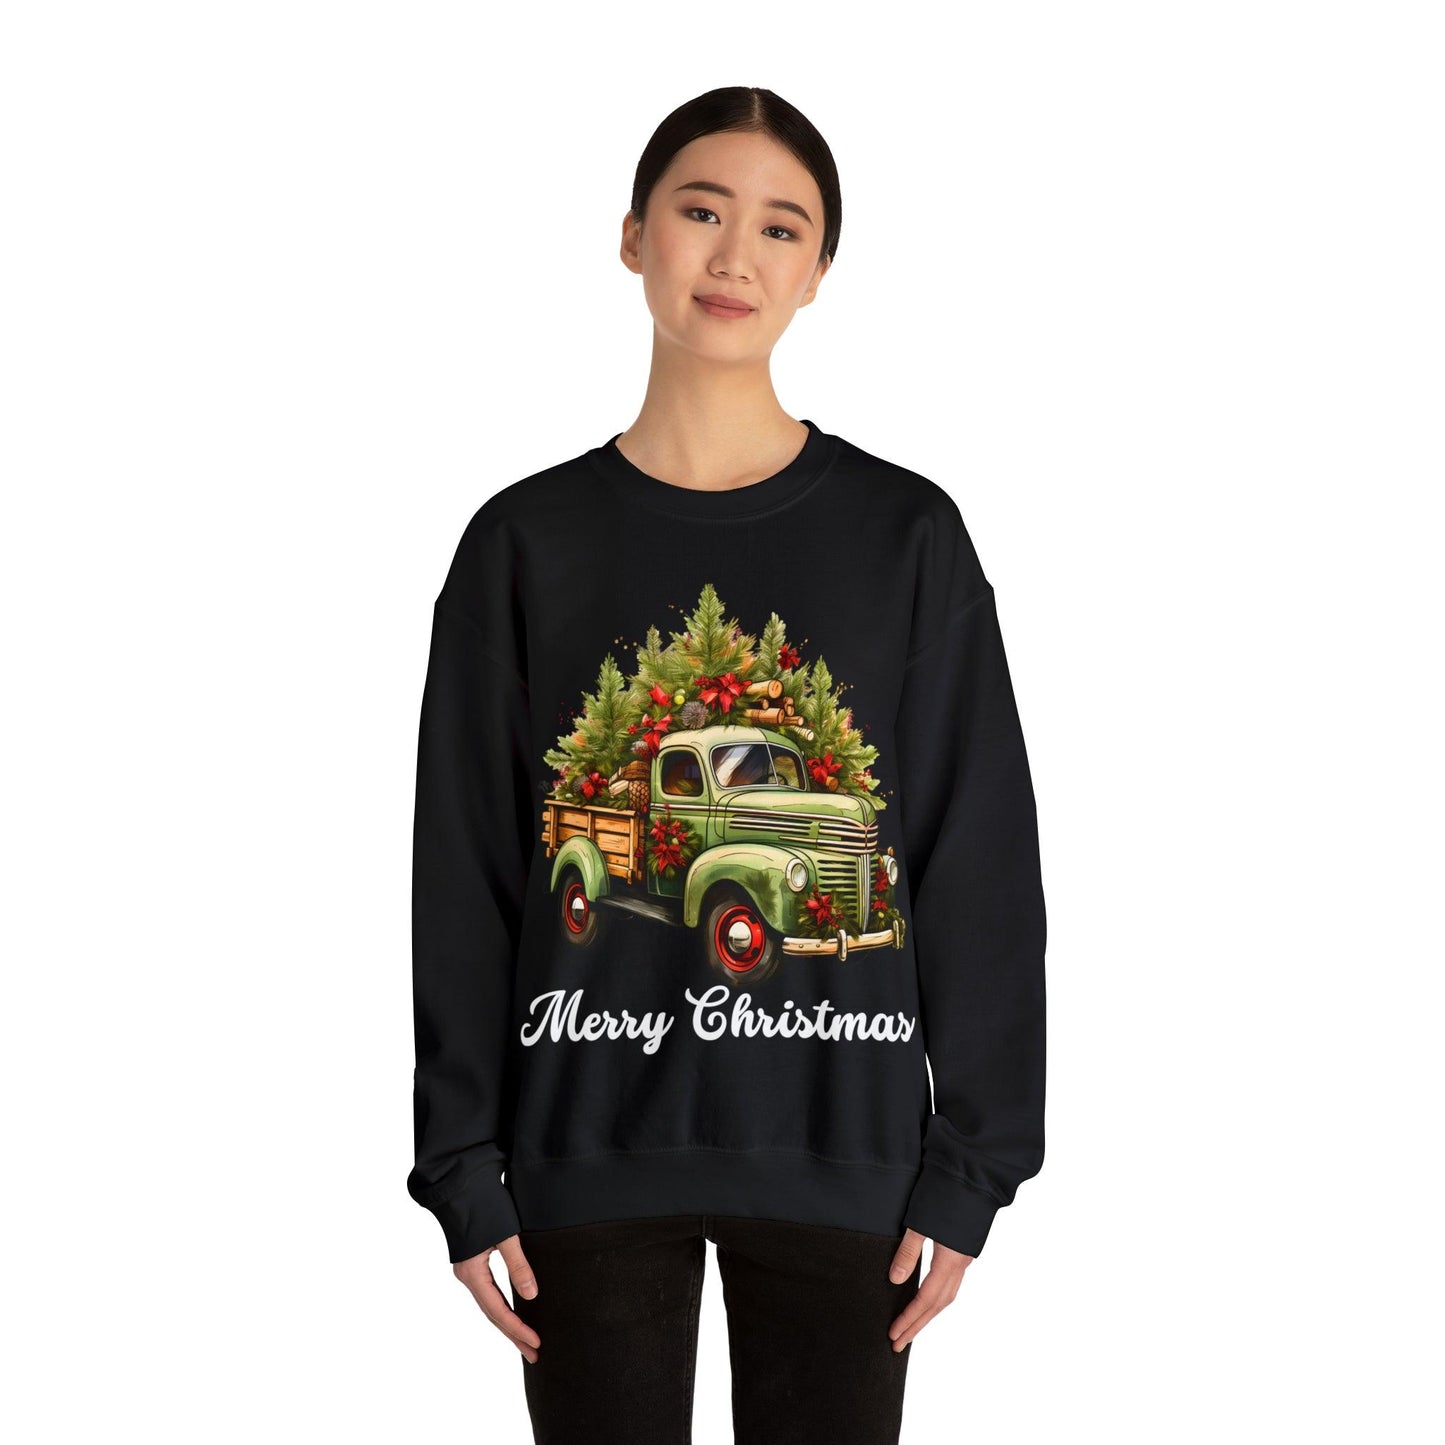 Christmas Sweatshirt Christmas Tree Sweatshirt Christmas Sweater Tree Truck Shirt Christmas Sweatshirt Tree Sweat Pine Tree - Giftsmojo